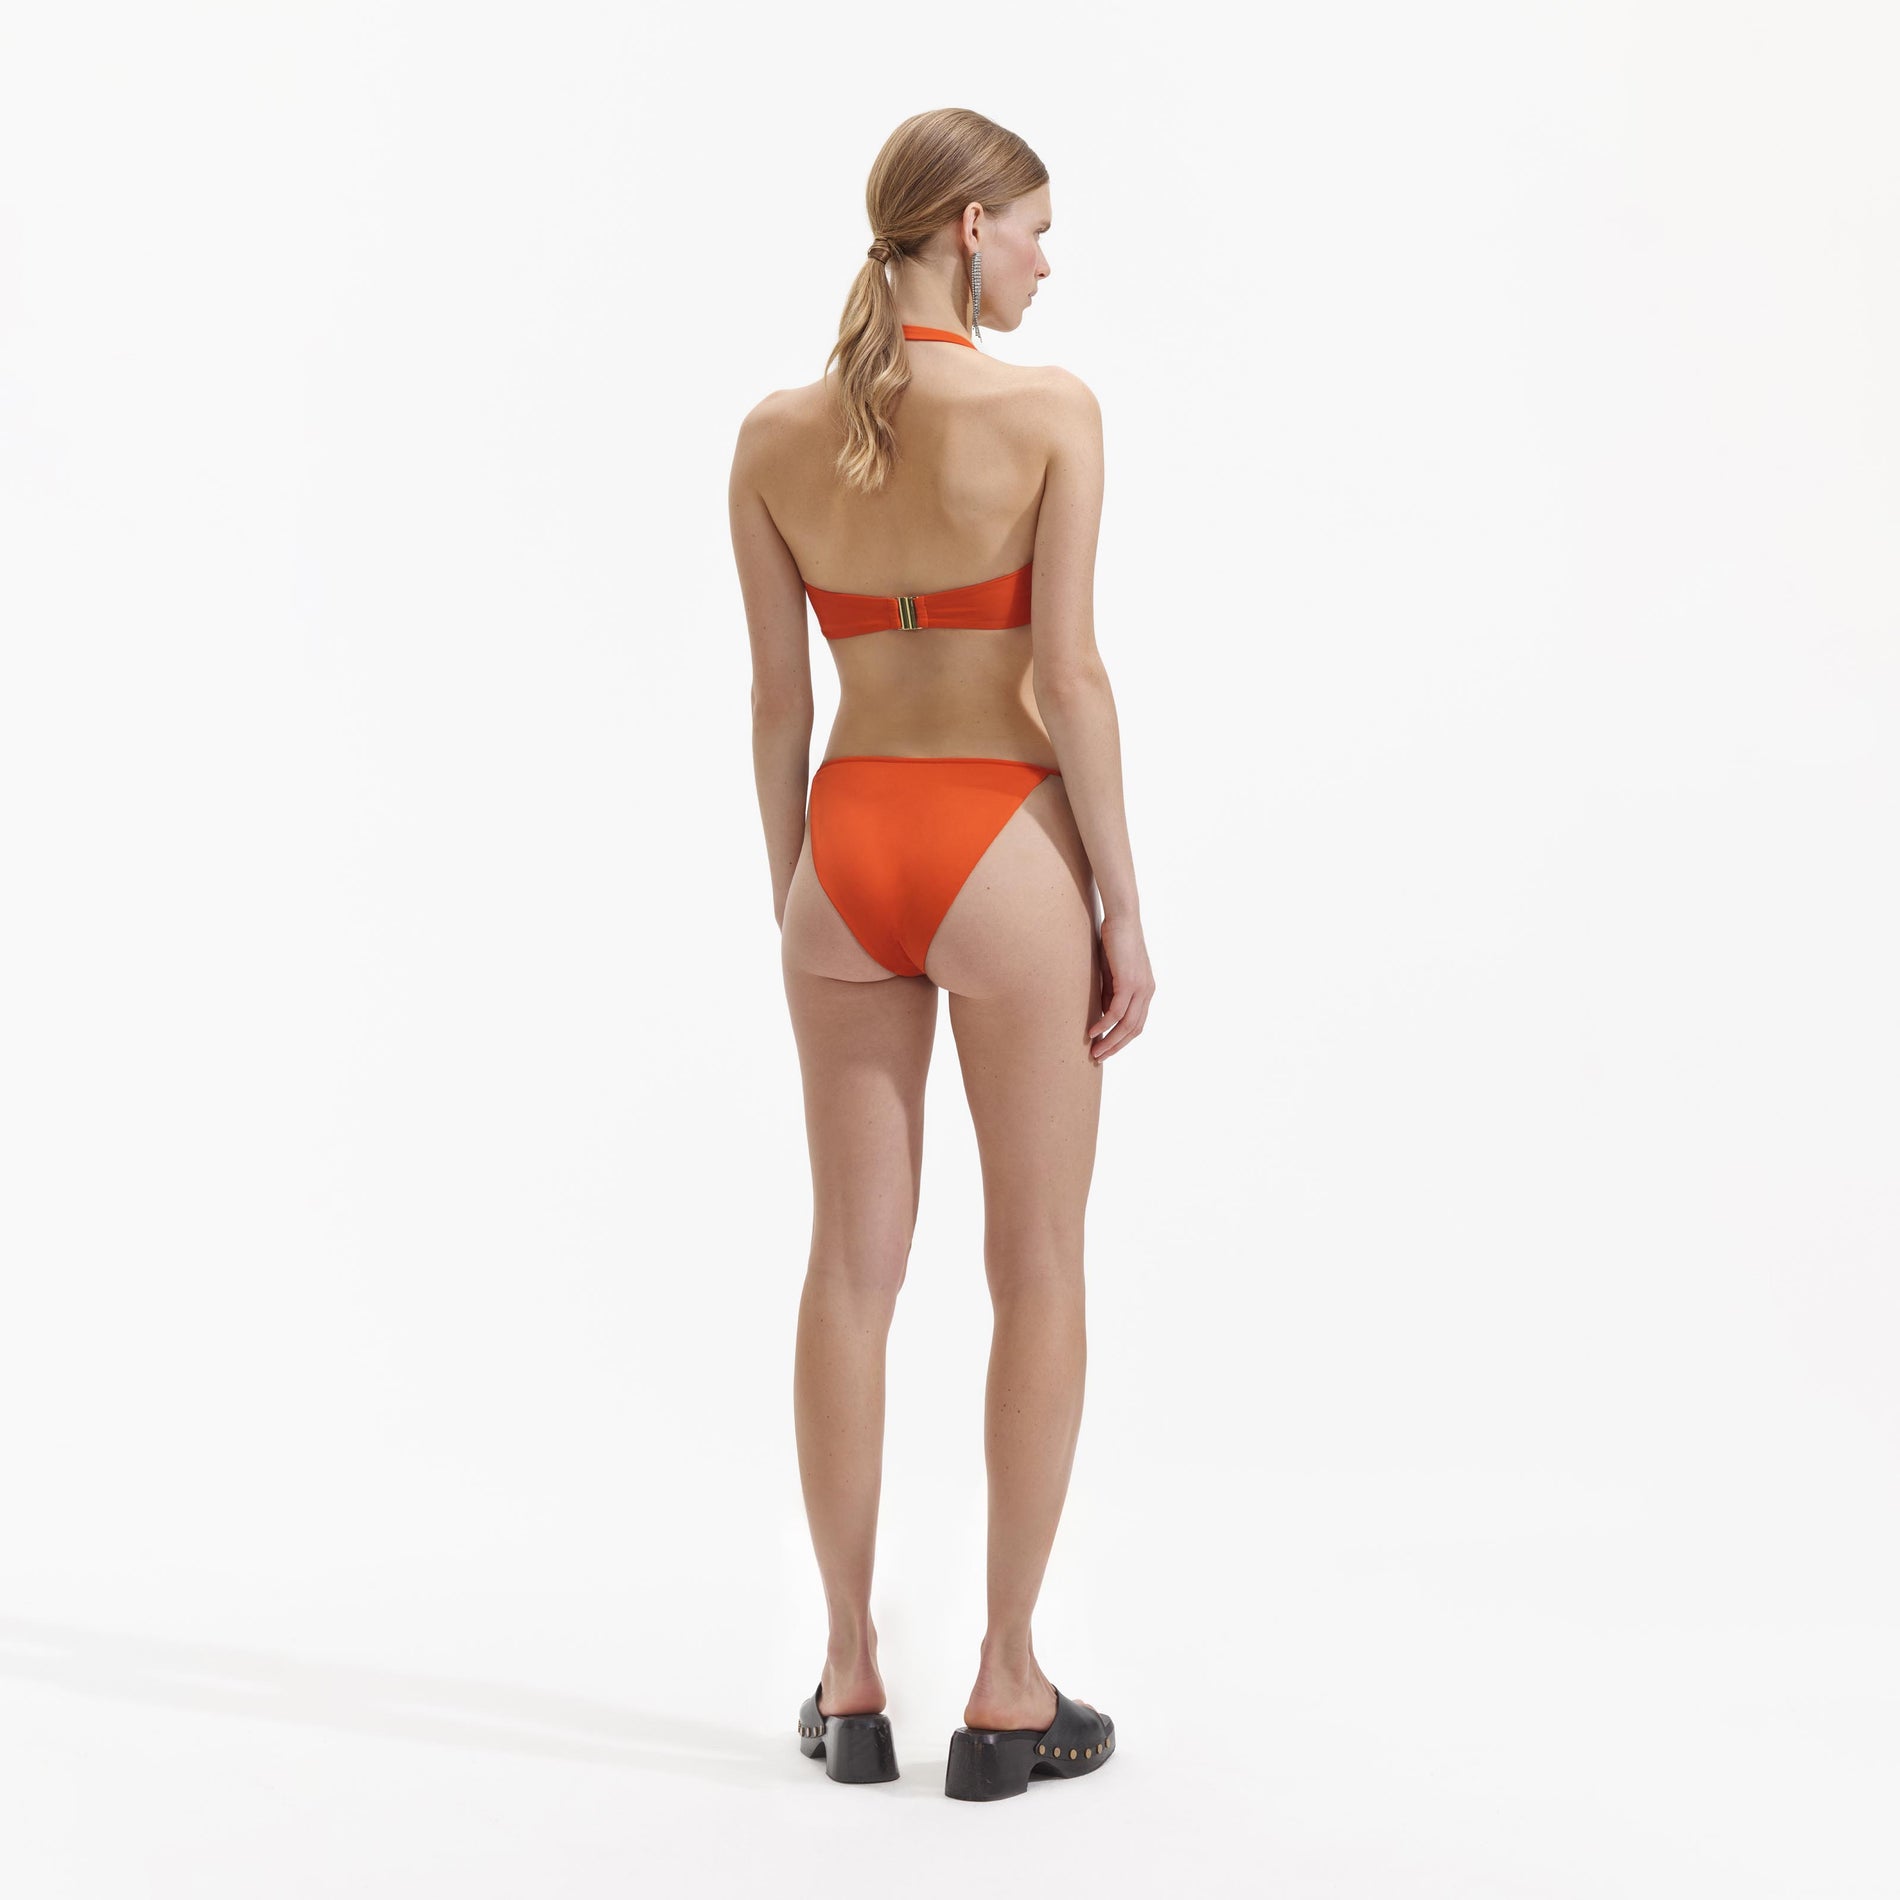 Swim Brief for Women - Brief Bikini Bottom